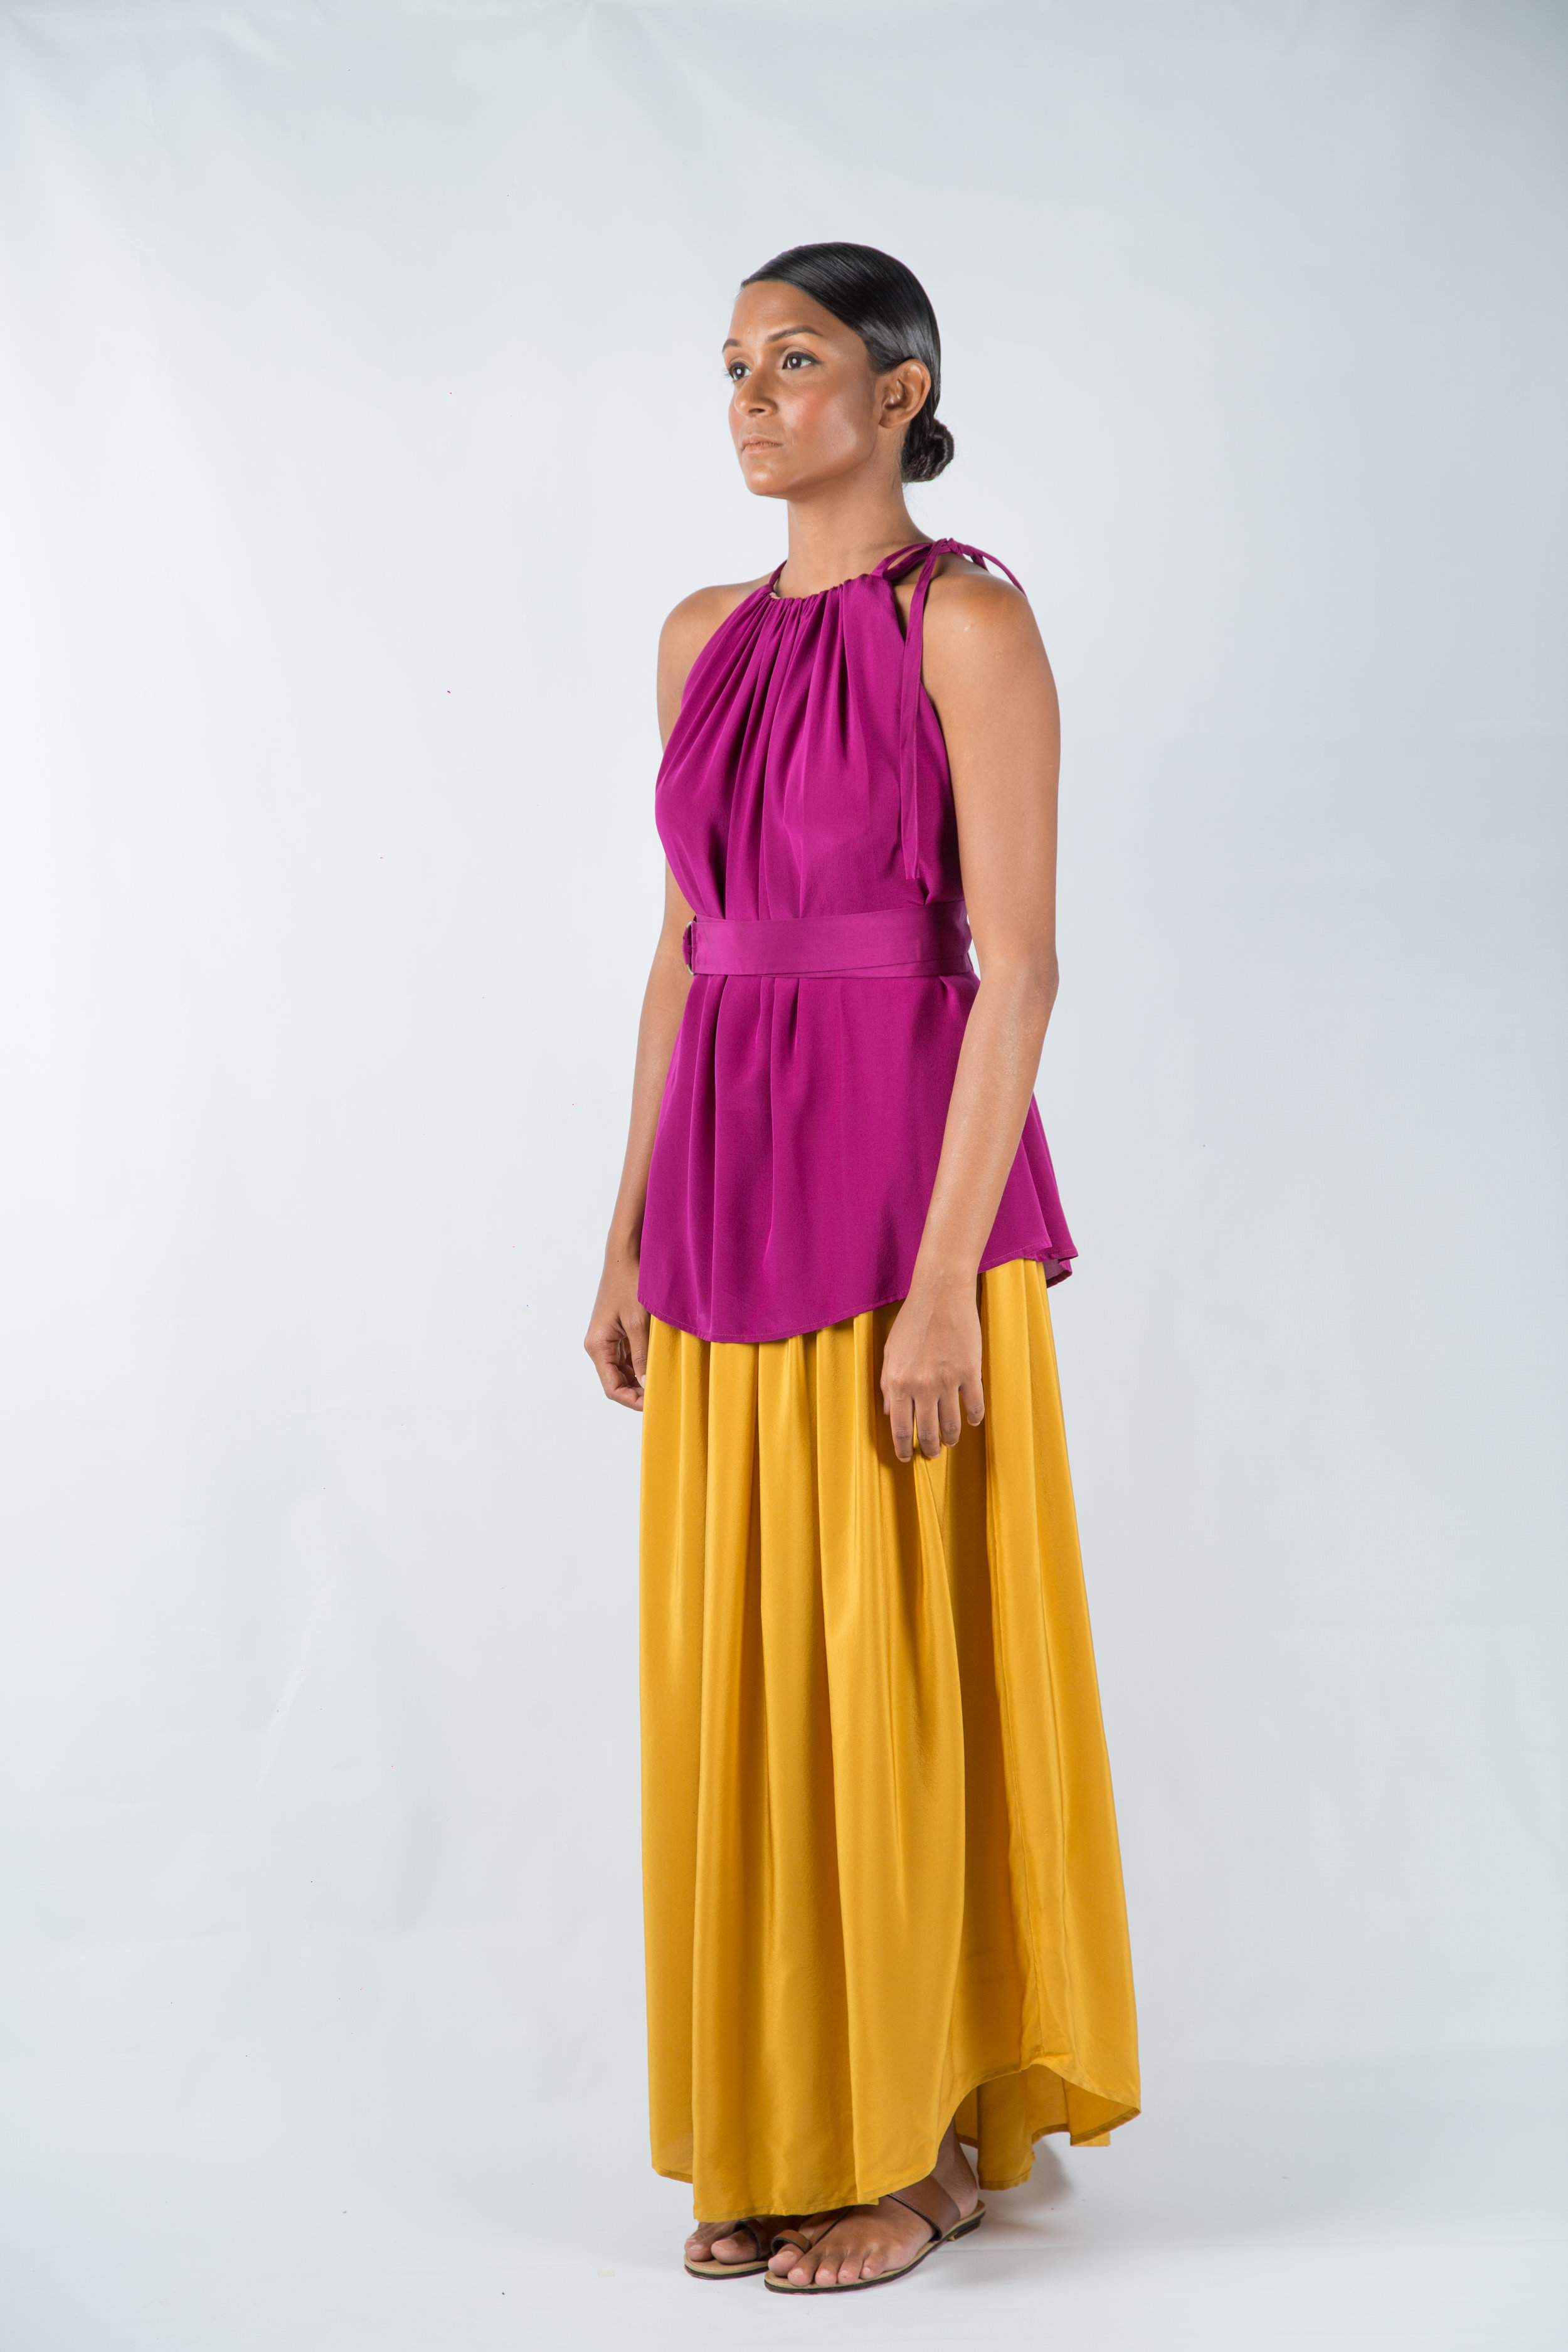 Asha layer dress 1 - plum_saffron.jpg